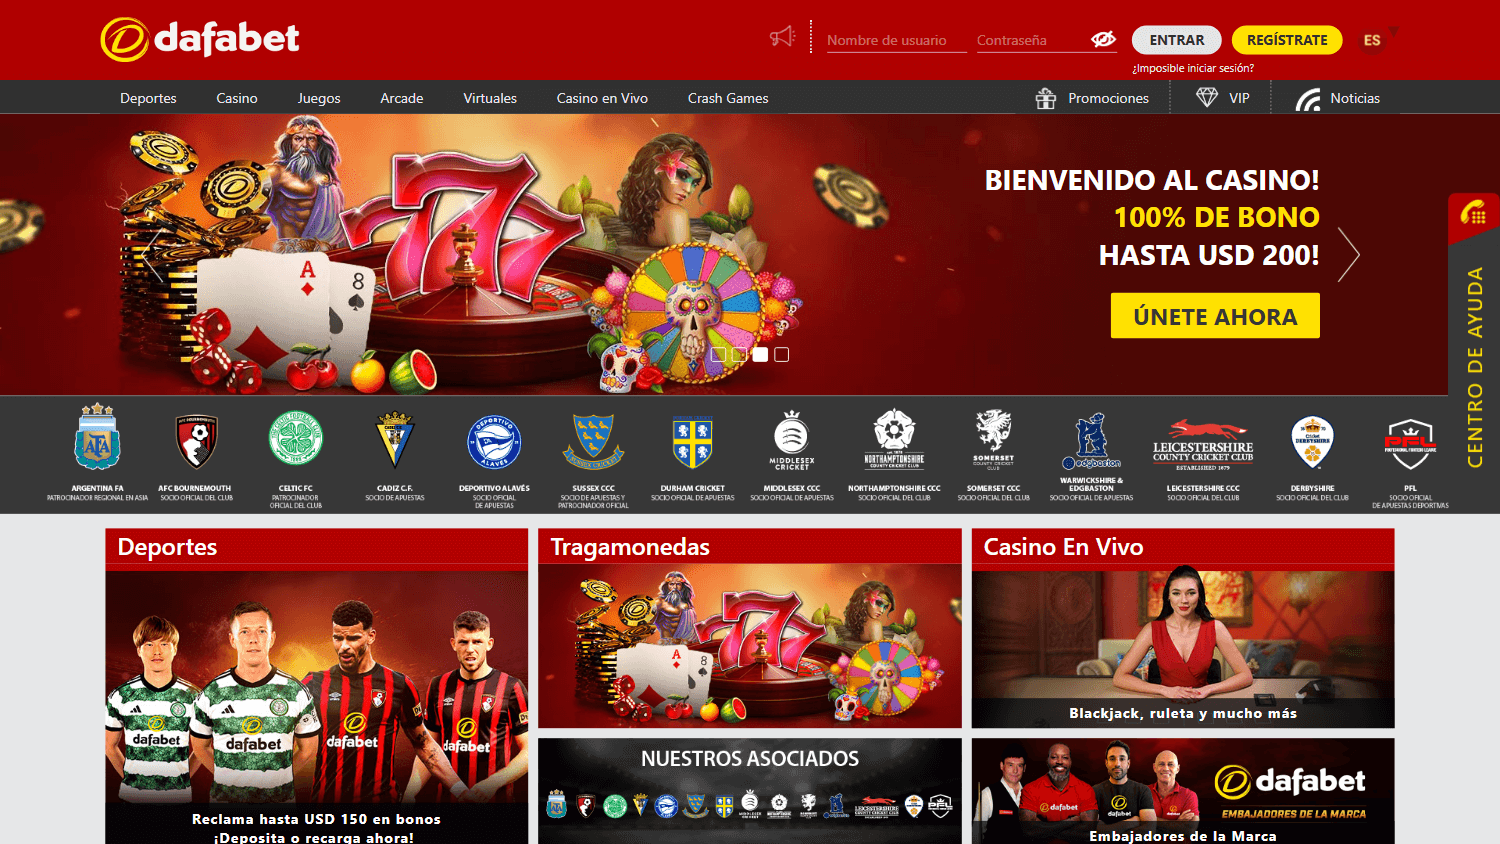 dafabet_casino_homepage_desktop